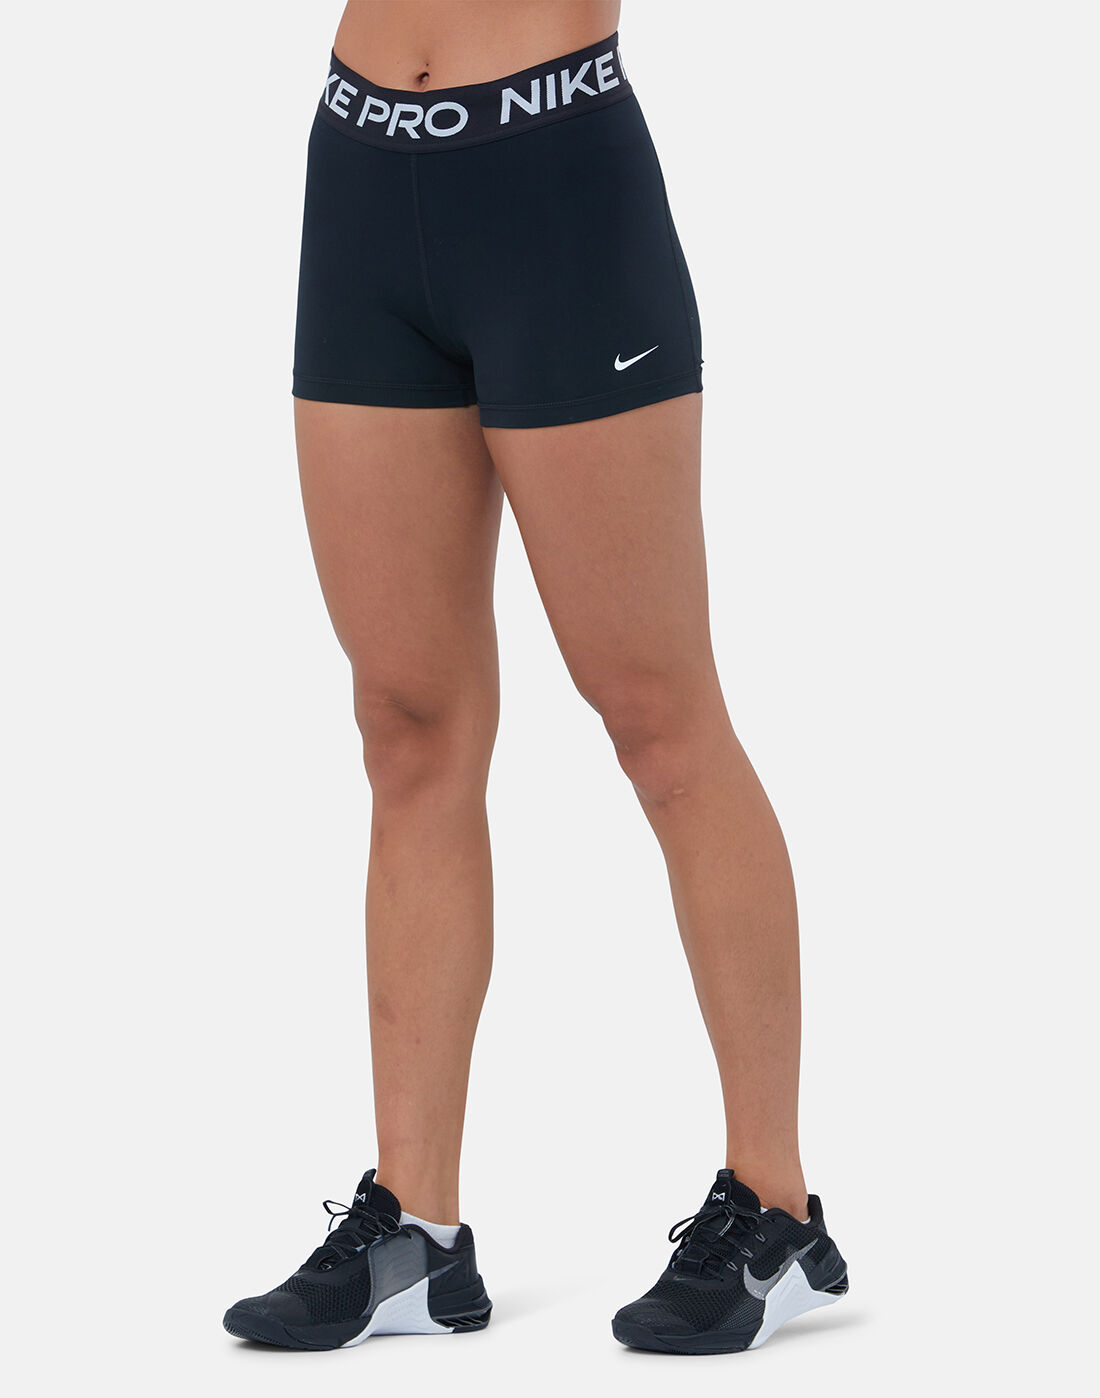 Nike Womens Pro 3 Inch Shorts - Black 